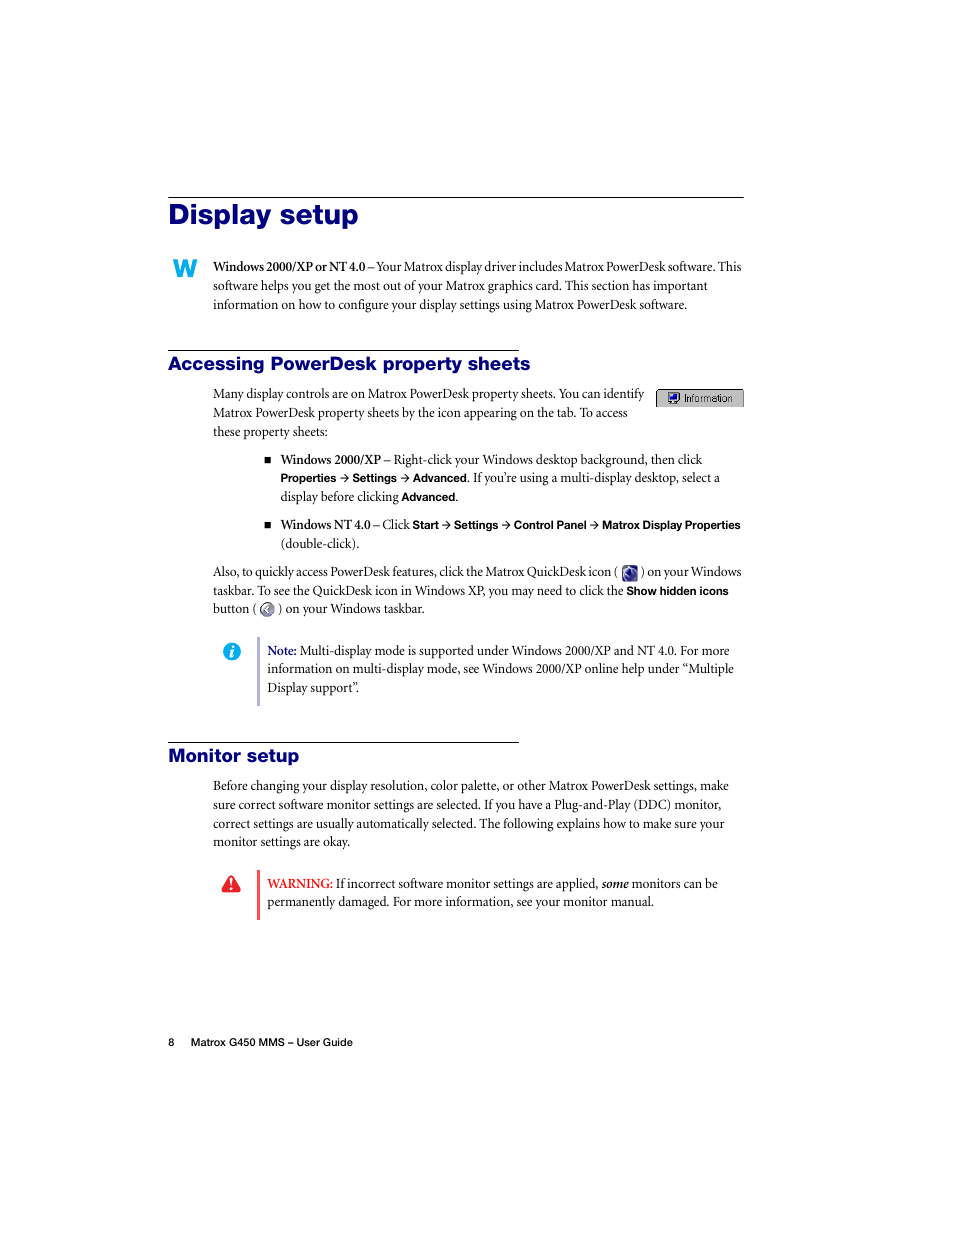 Display Setup Accessing Powerdesk Property Sheets Monitor Setup